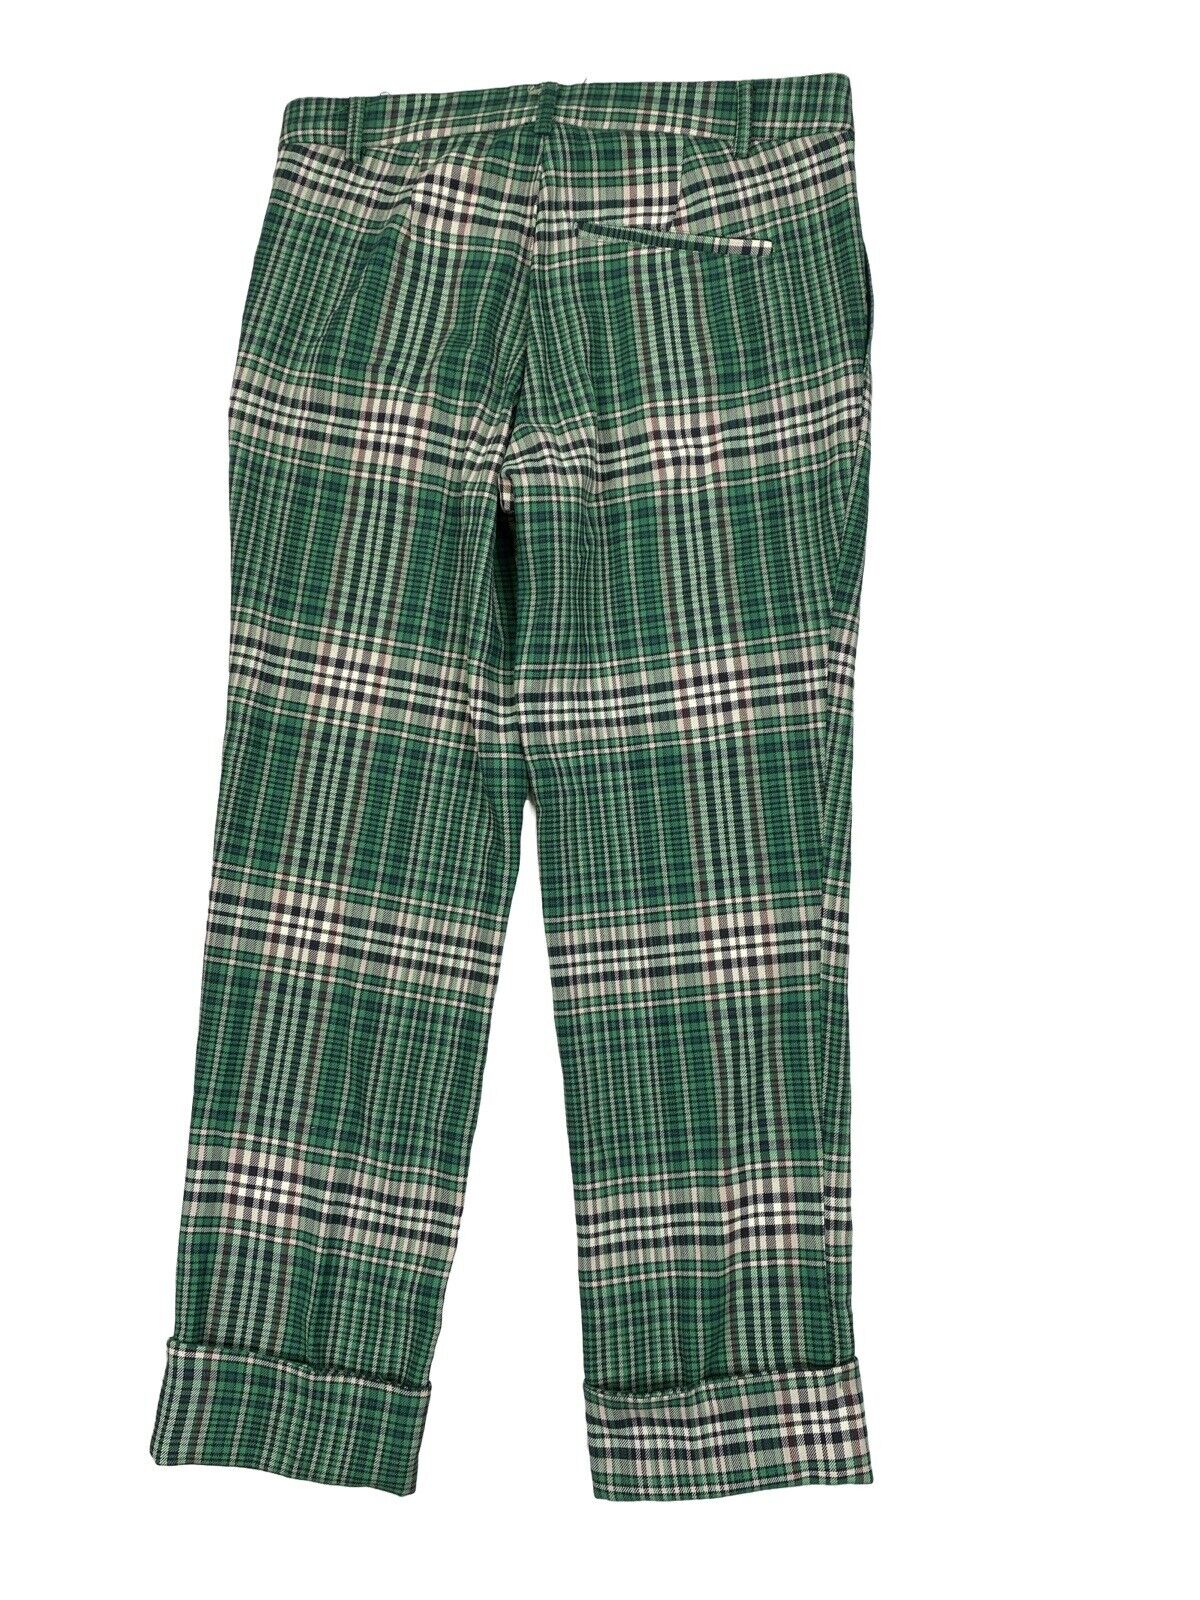 Free People Women's Green Plaid Cuffed Leg Pants - 4